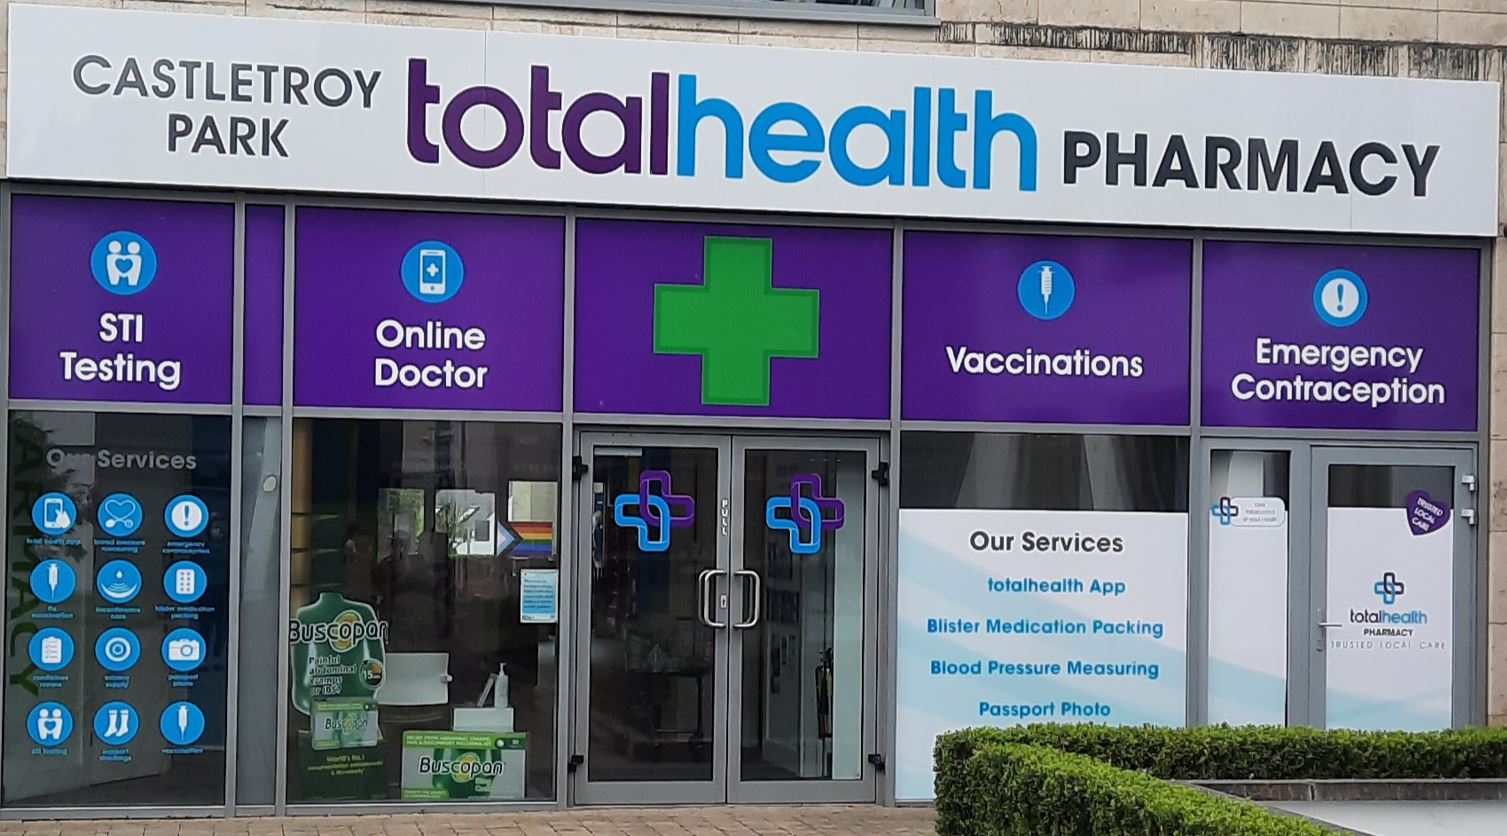 Castletroy Park totalhealth Pharmacy - Limerick